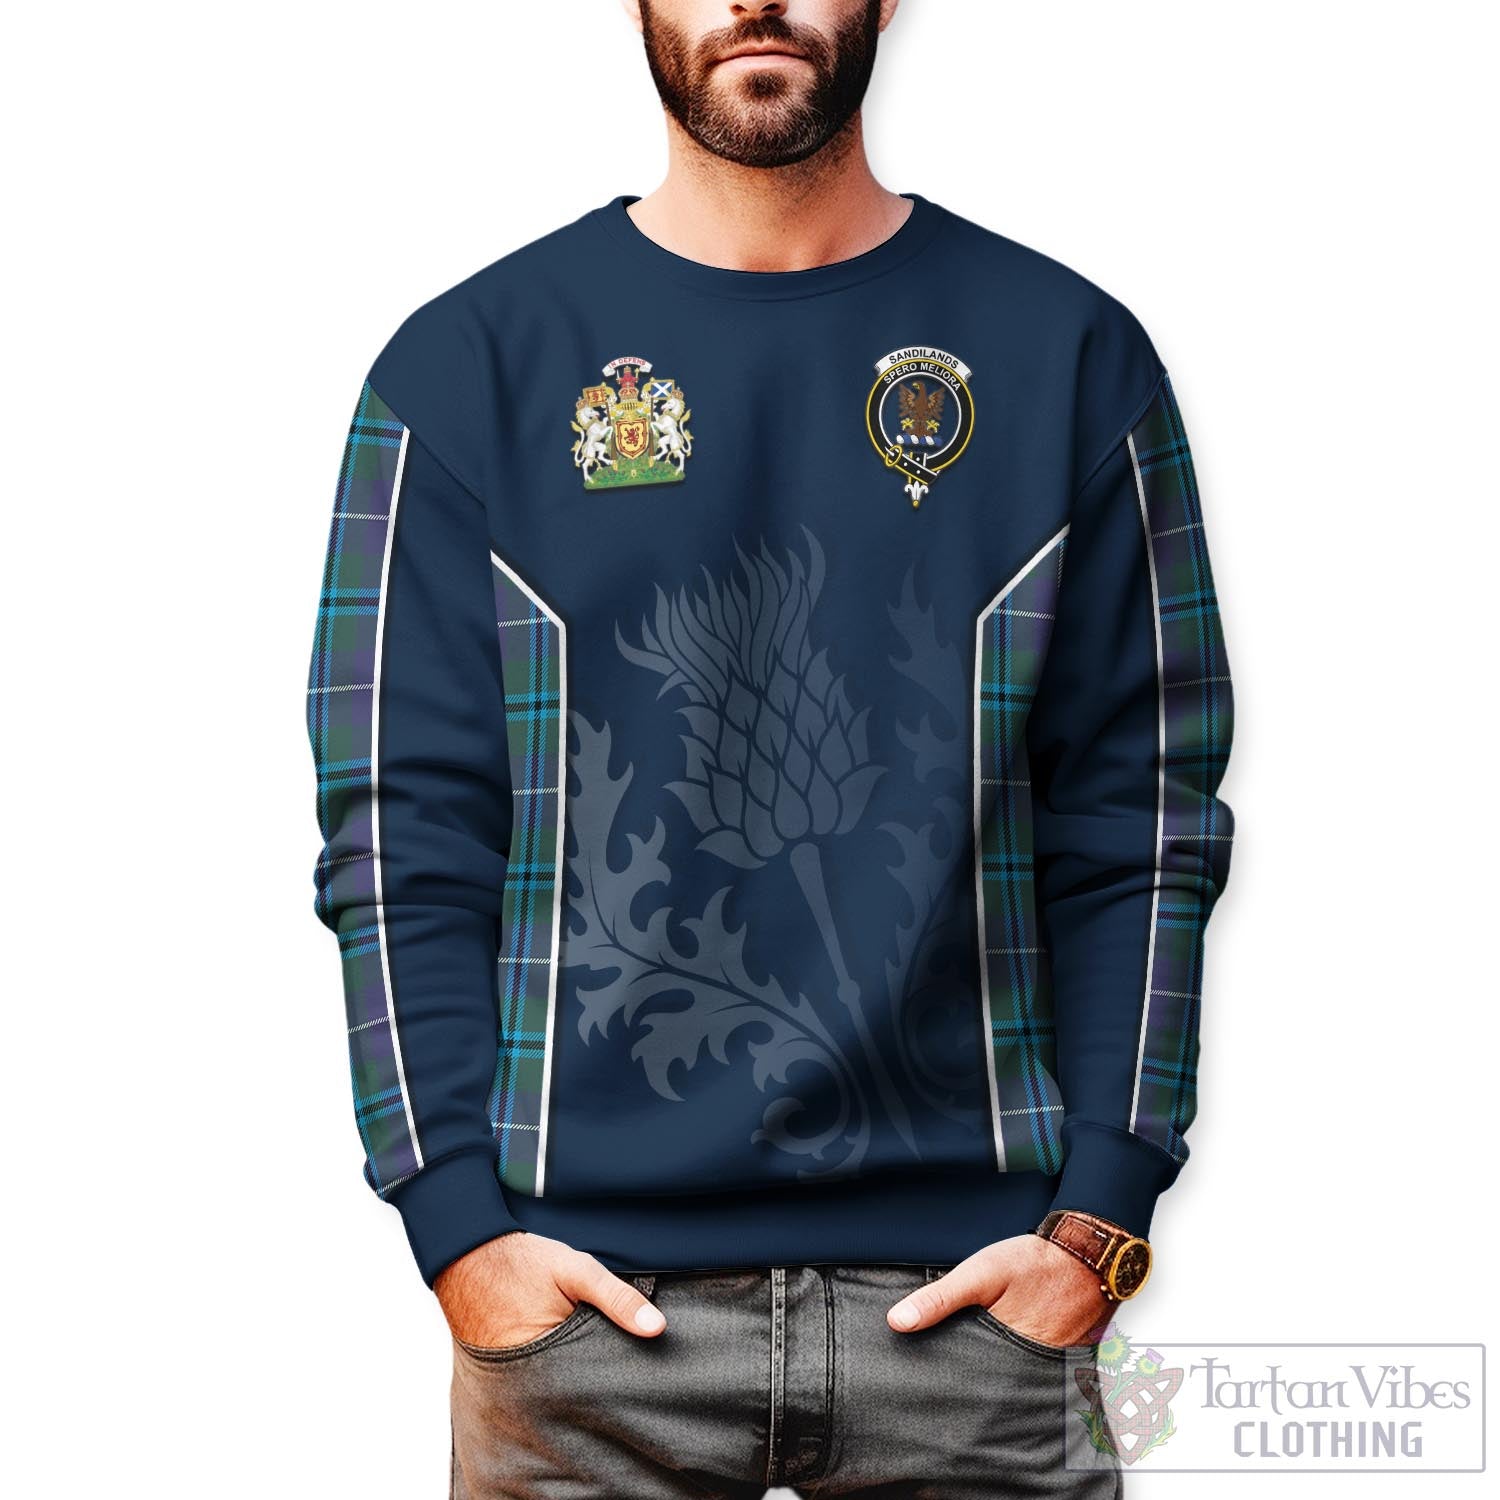 Tartan Vibes Clothing Sandilands Tartan Sweatshirt with Family Crest and Scottish Thistle Vibes Sport Style